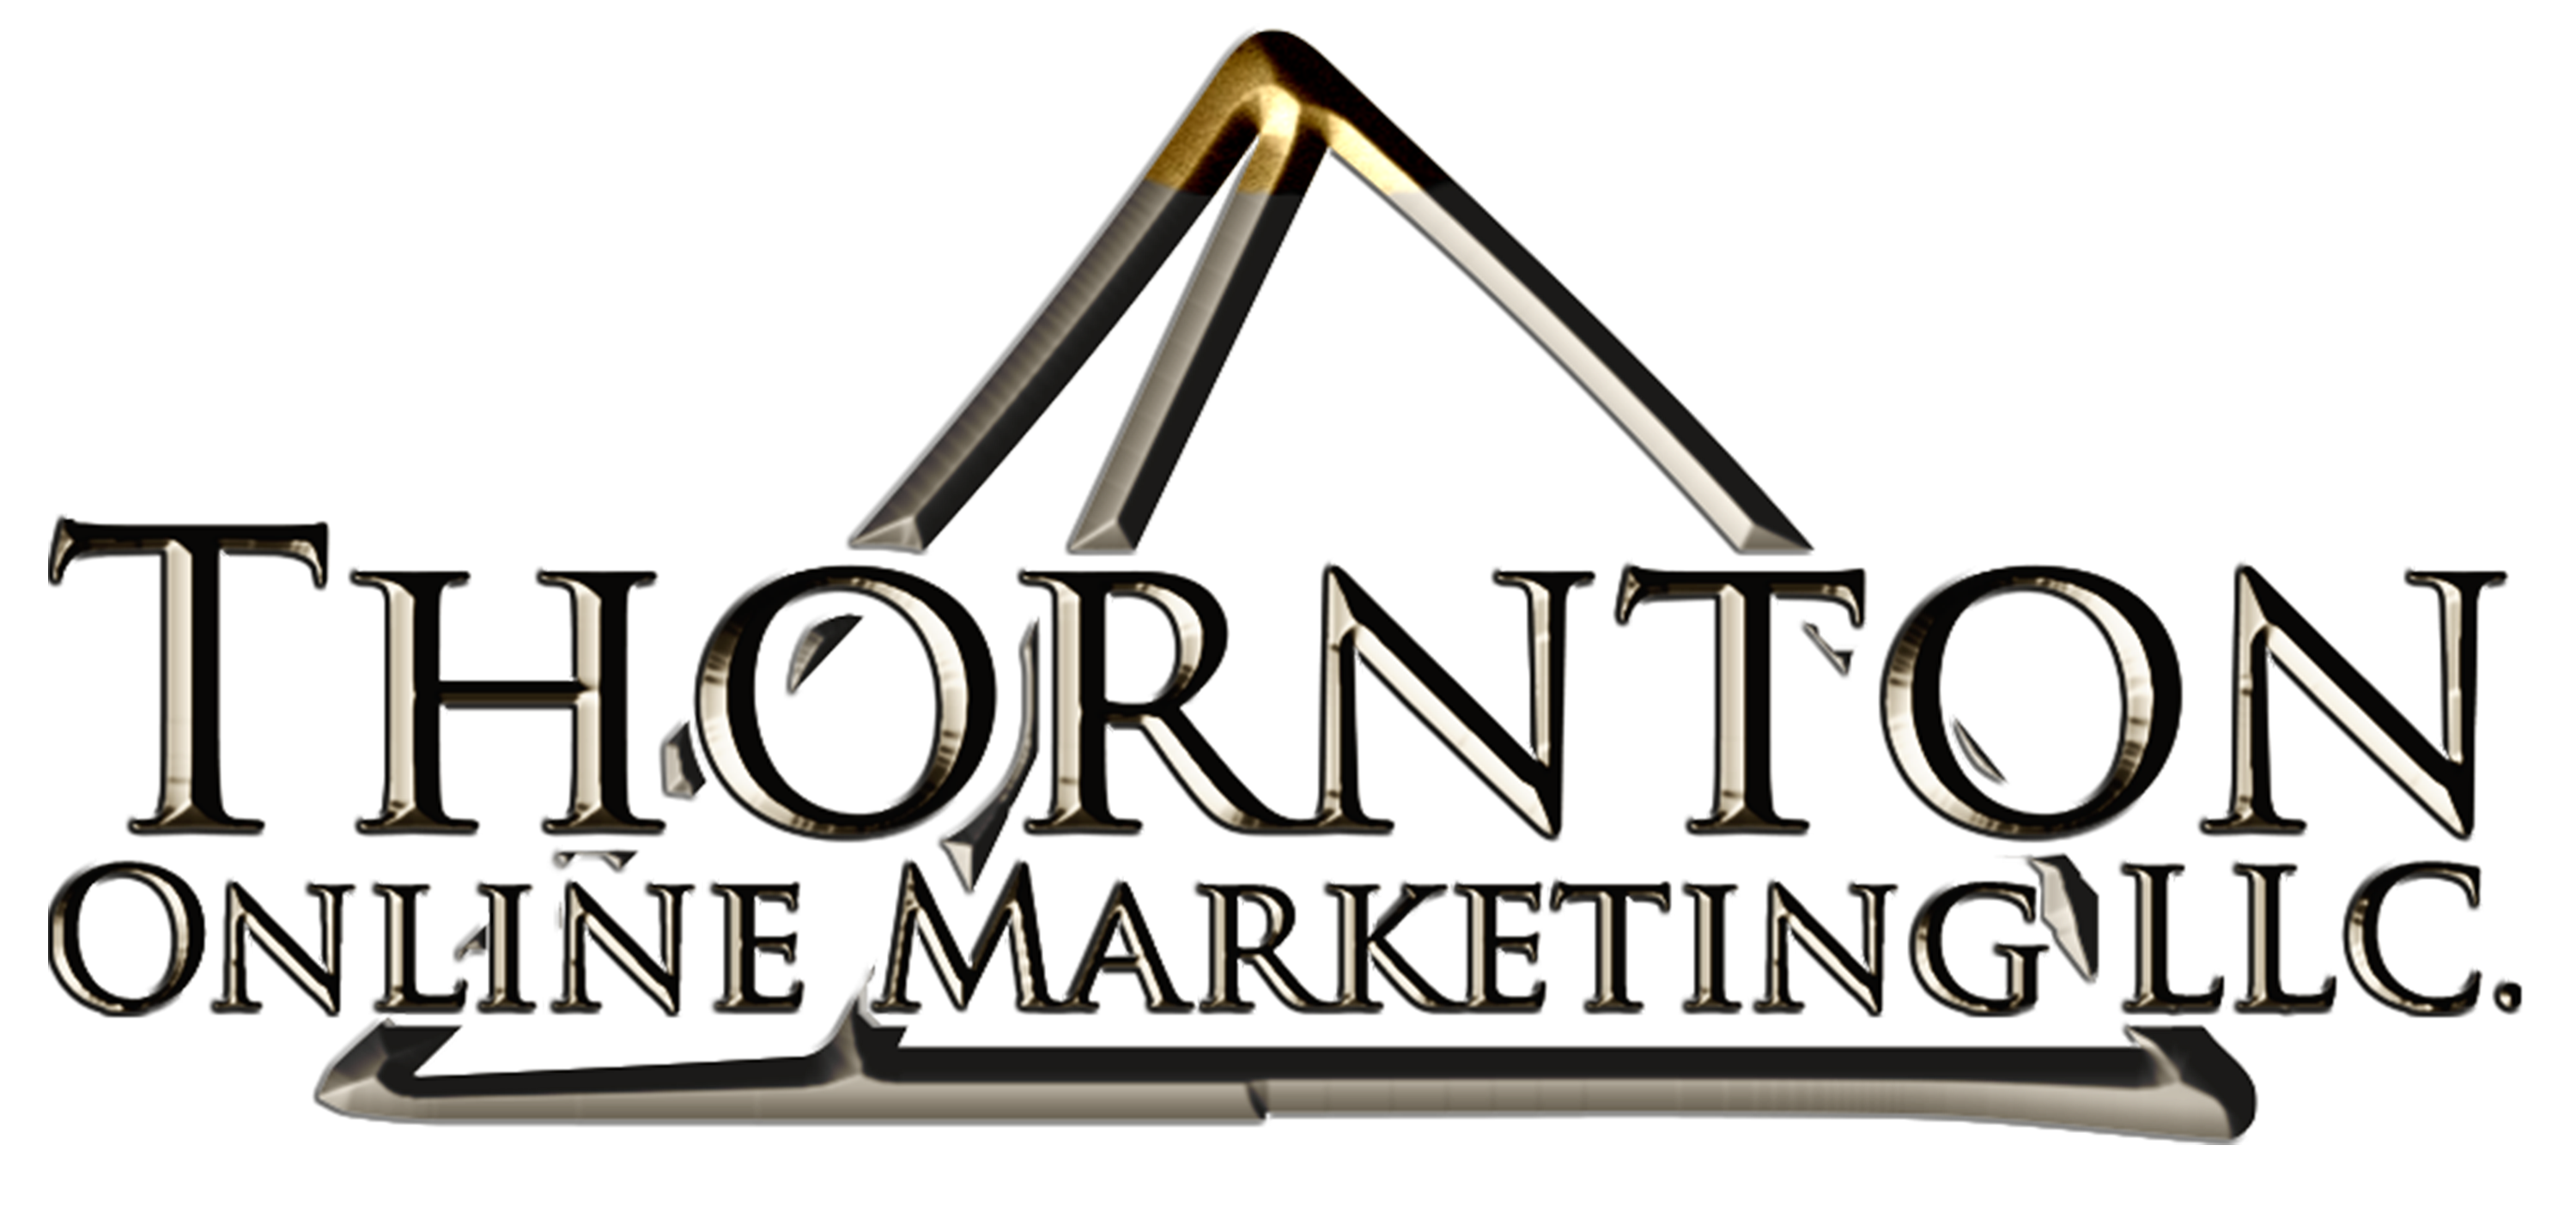 thornton online marketing logo